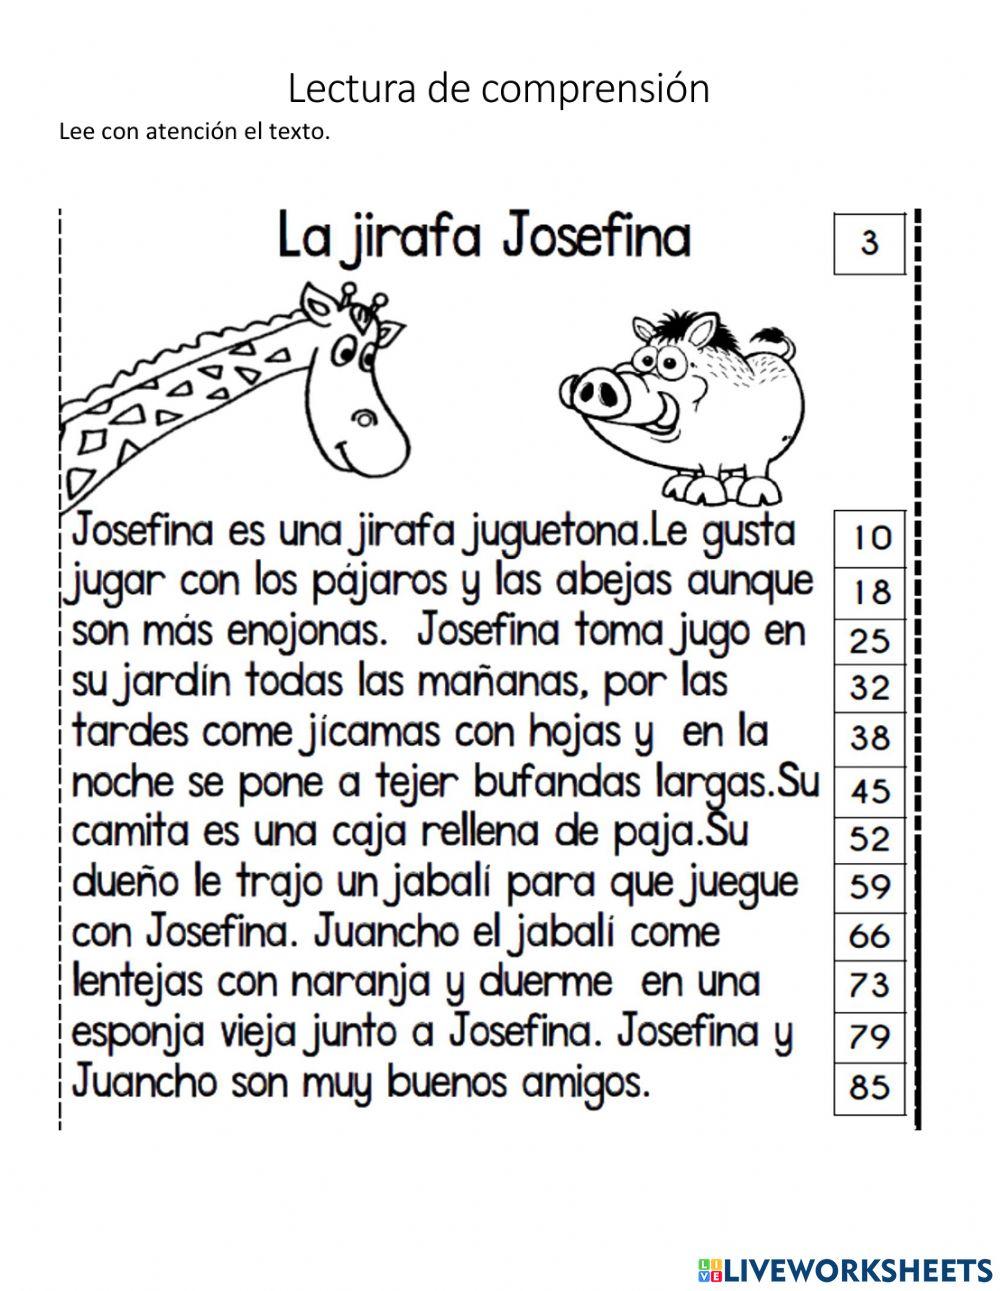 La jirafa Josefina